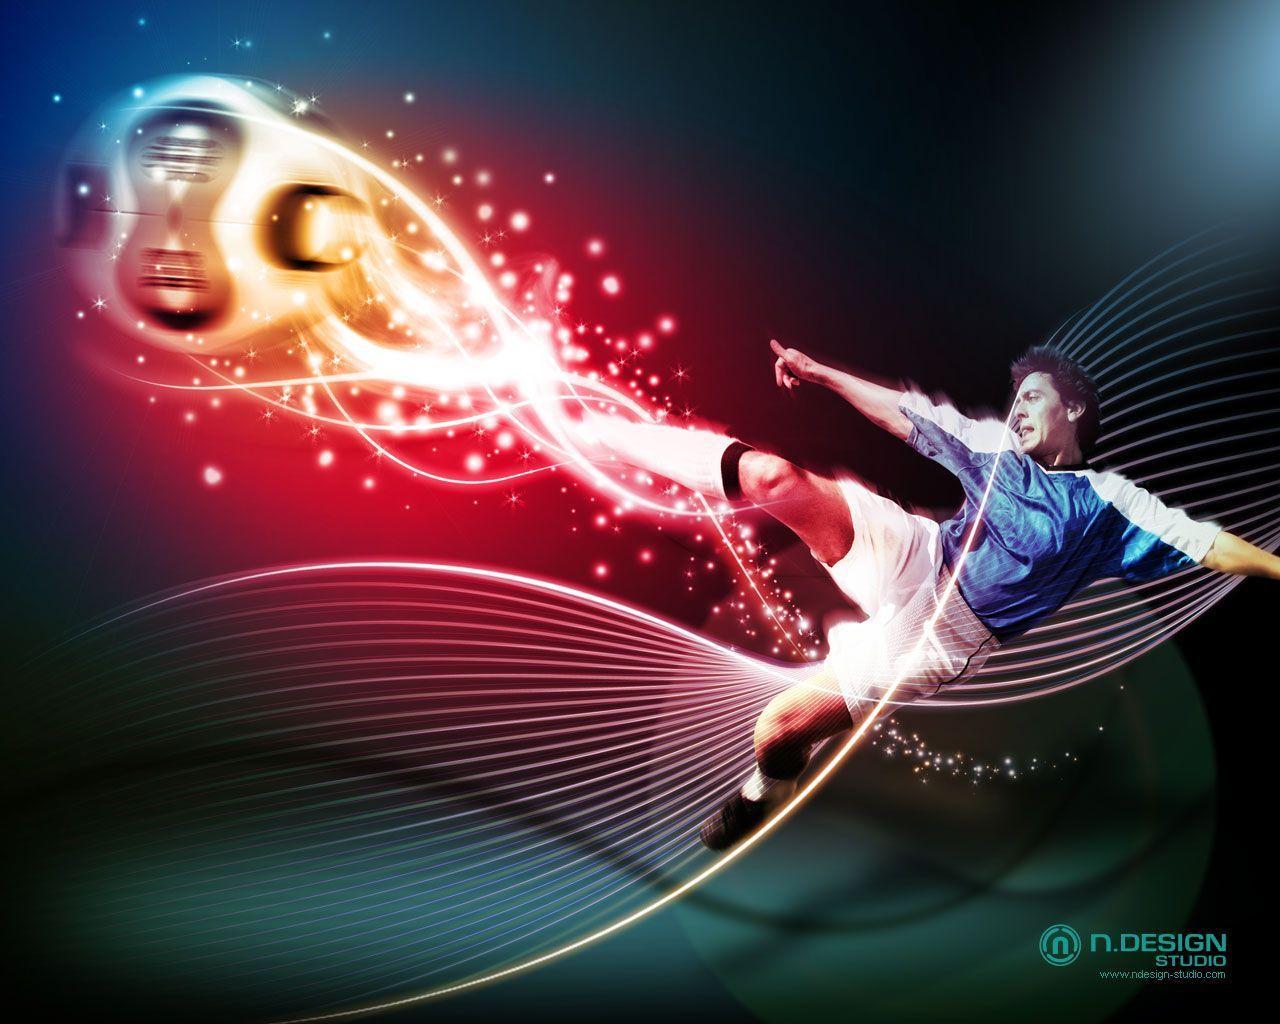 Cool Soccer Background Image